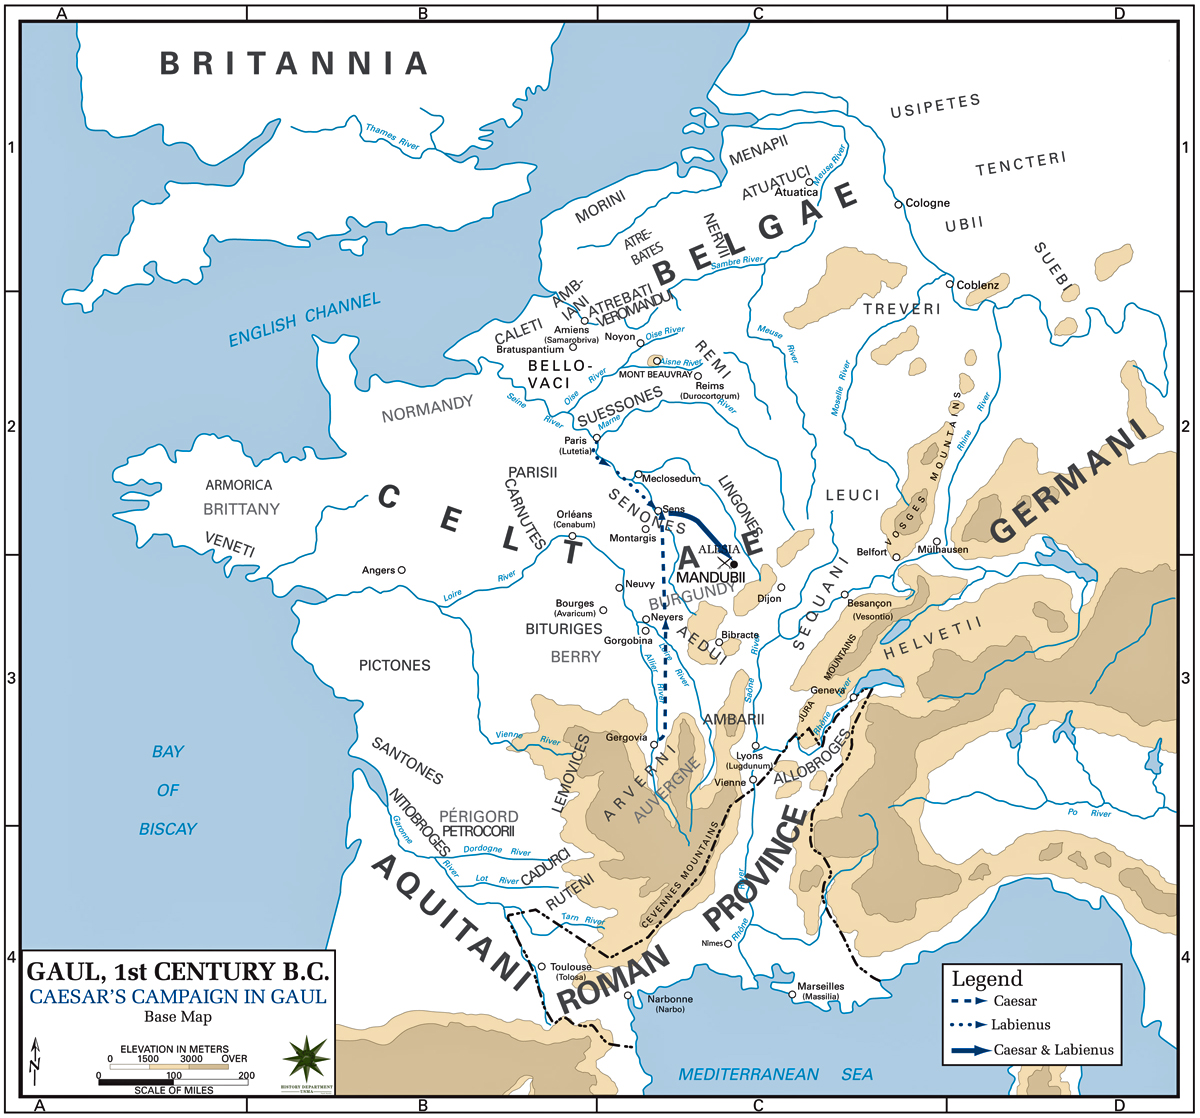 From Gergovia to Alesia - MAP - 52 BC